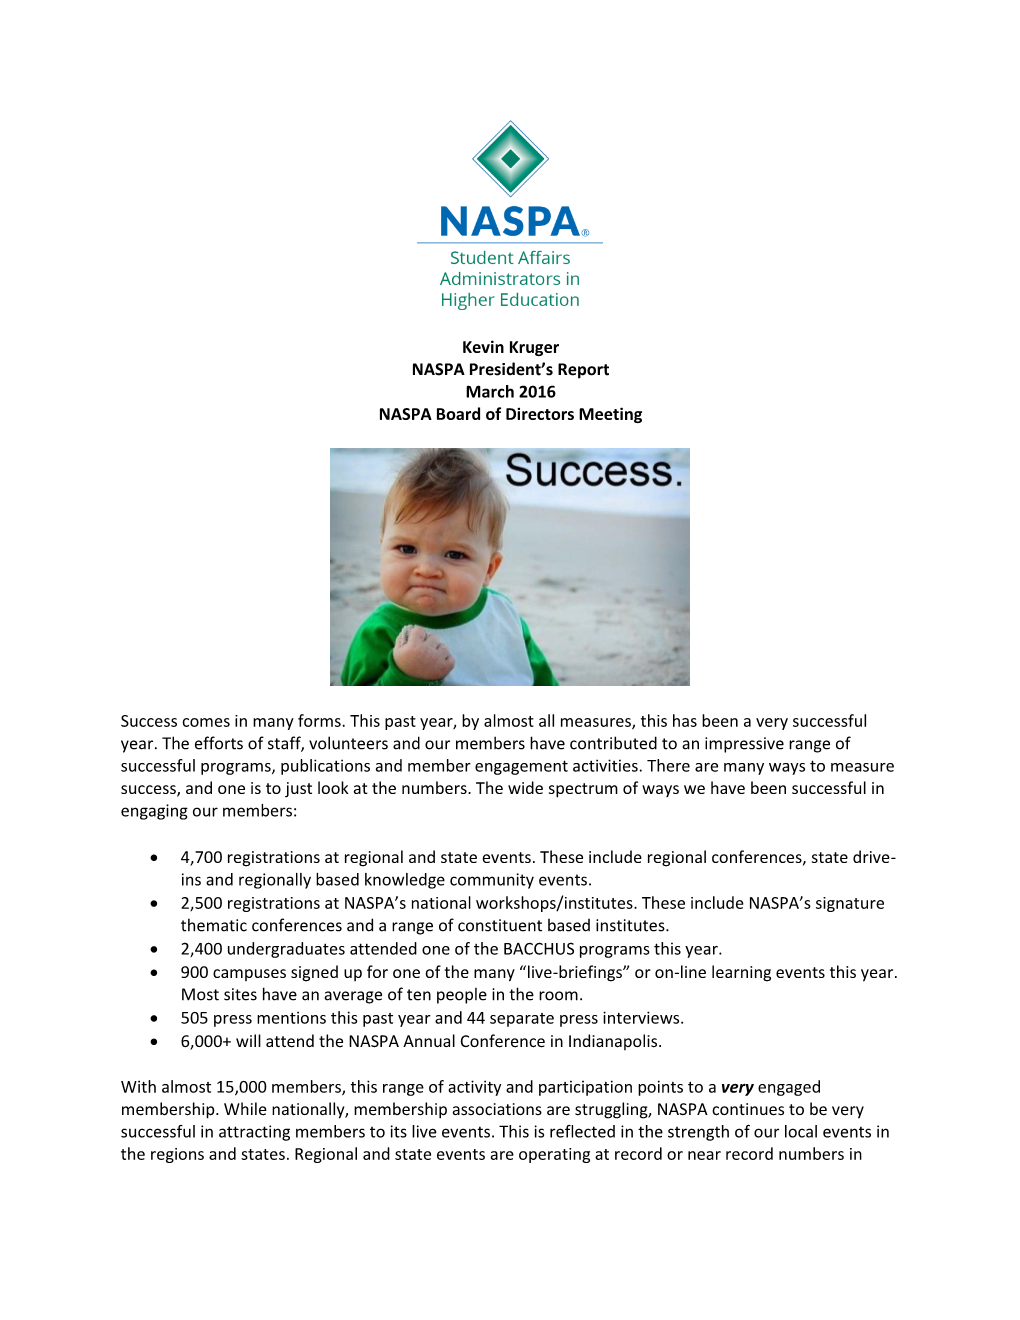 Kevin Kruger NASPA President's Report March 2016 NASPA Board